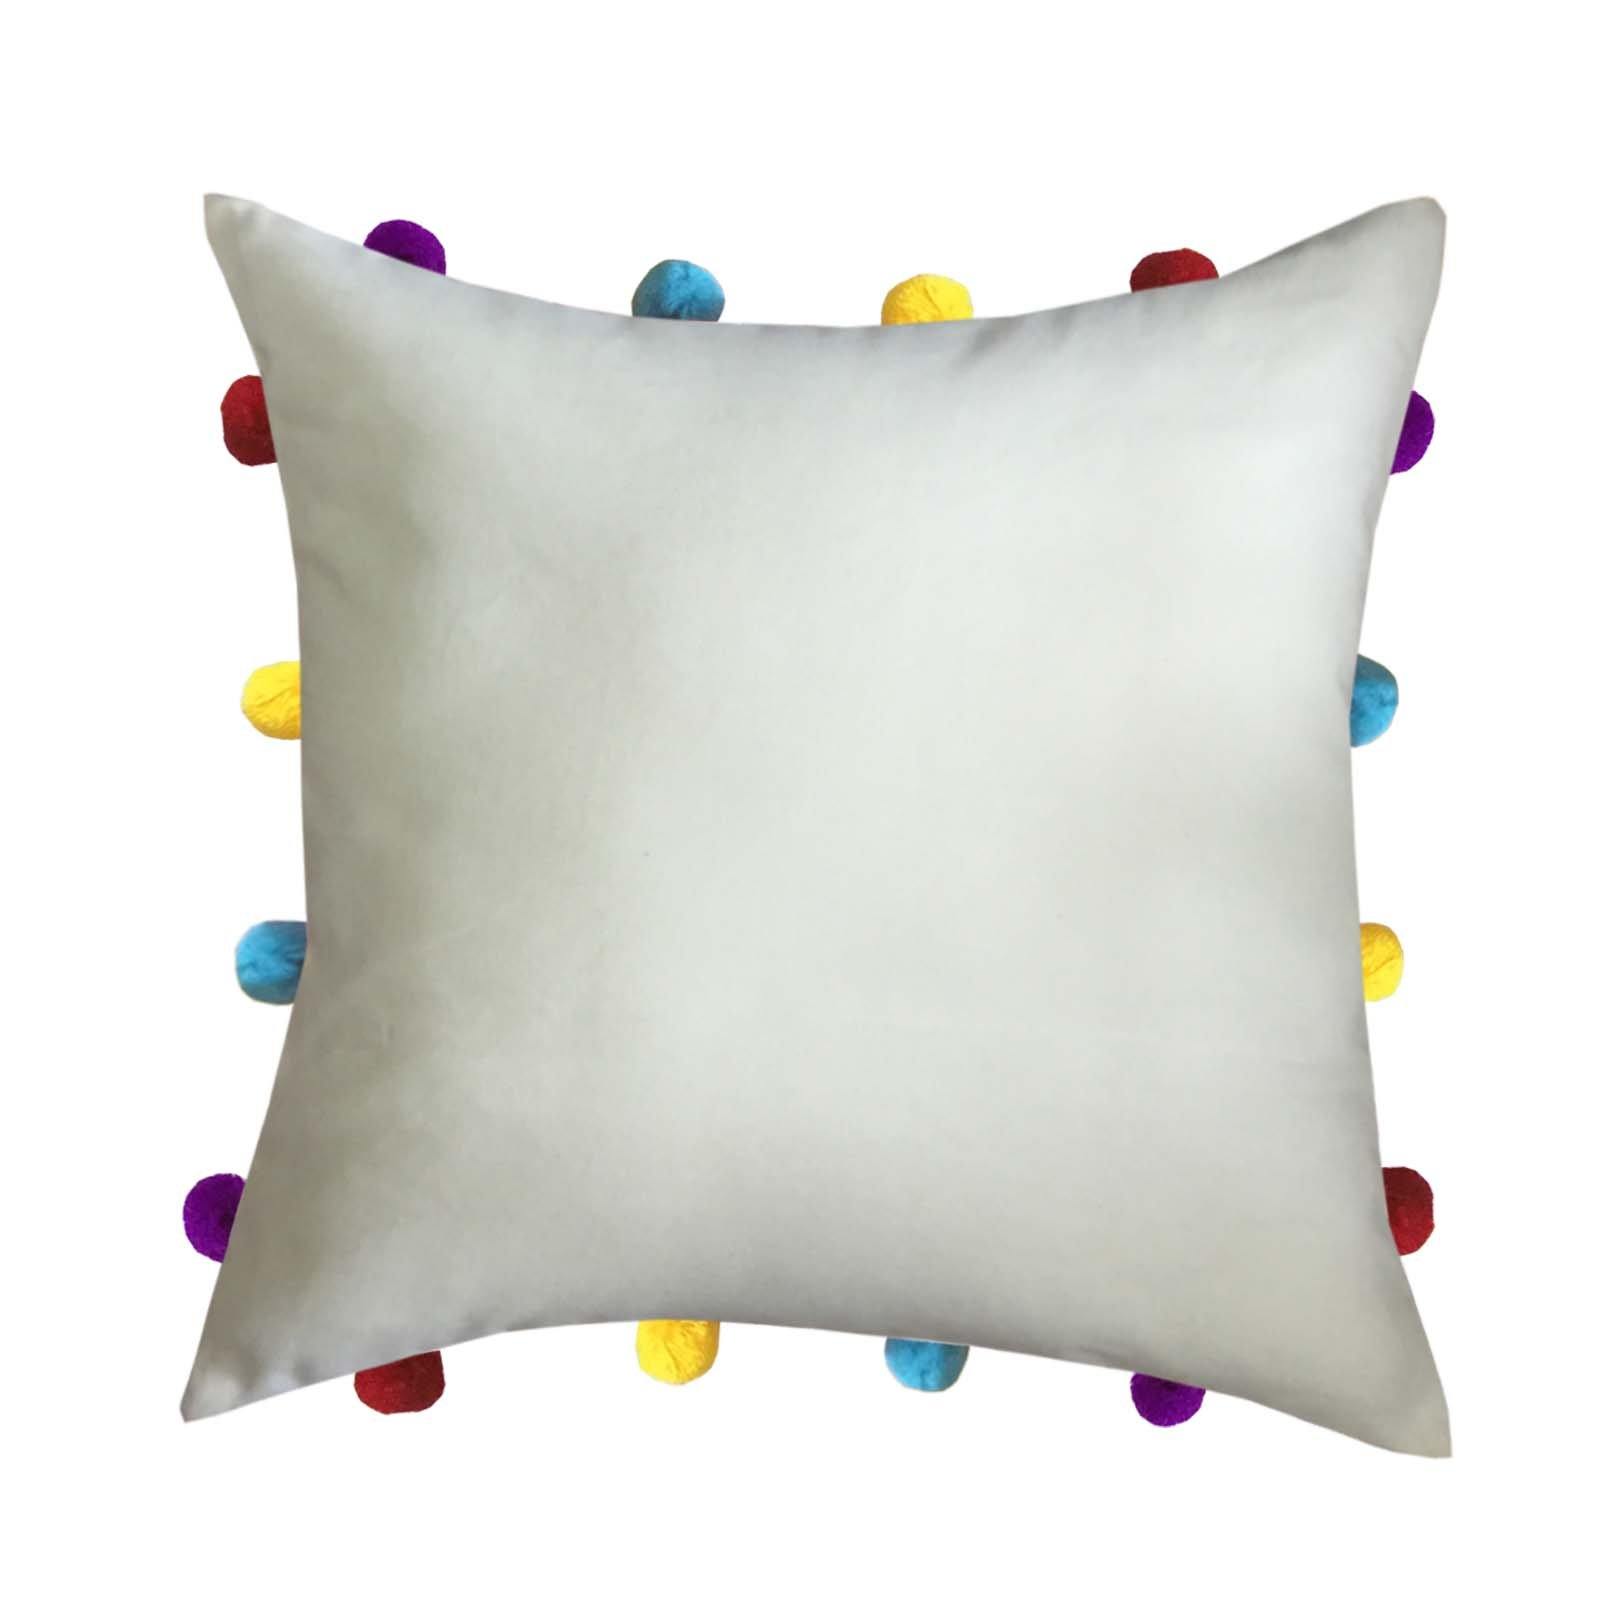 Lushomes Ecru Cushion Cover with Colorful pom poms (Single pc, 14 x 14”) - Lushomes